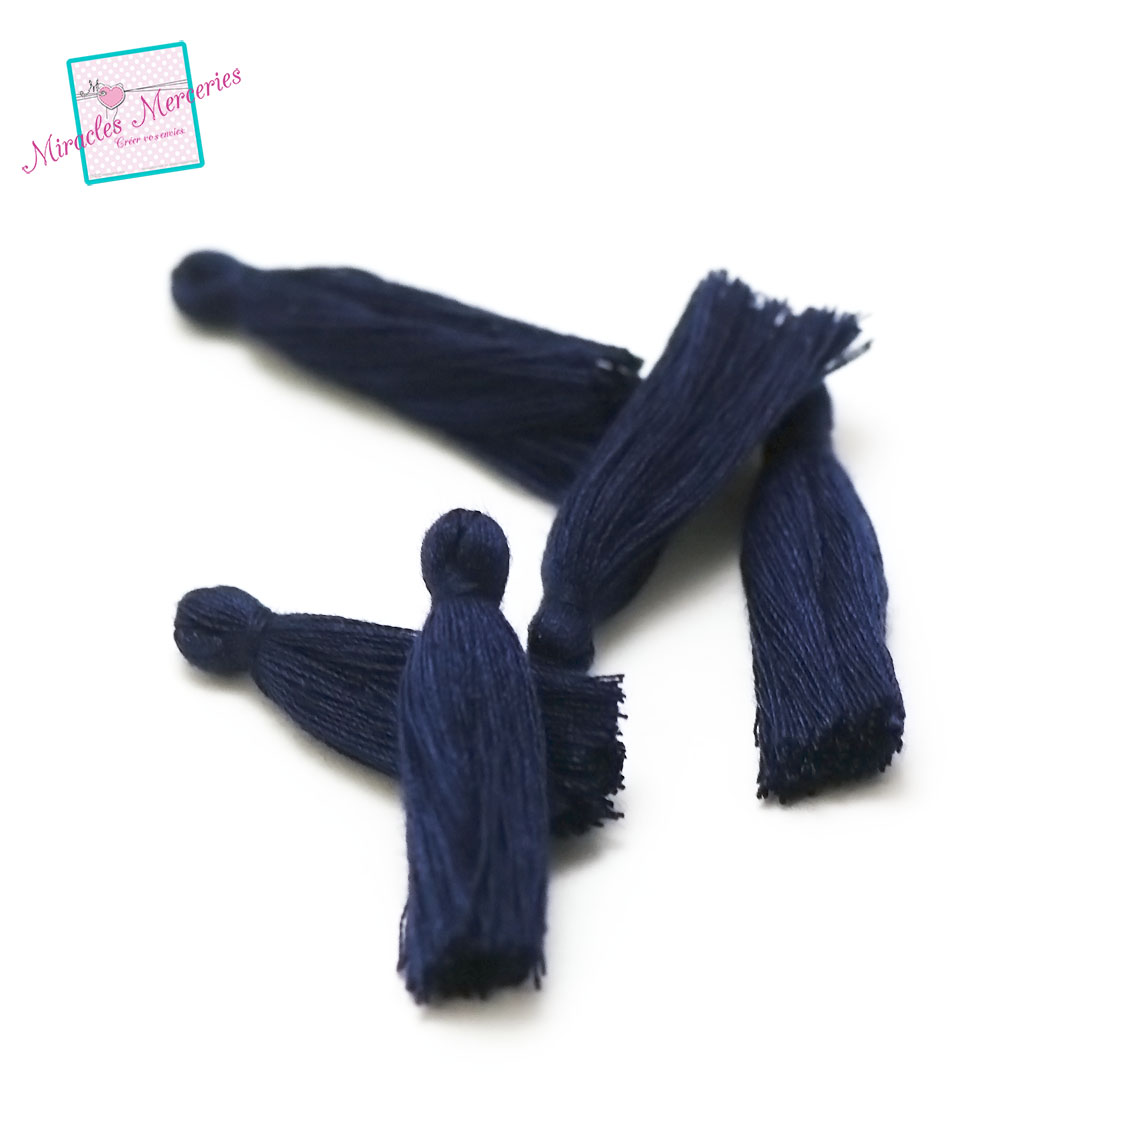 10 pompons en fil de coton 32 mm,bleu marine